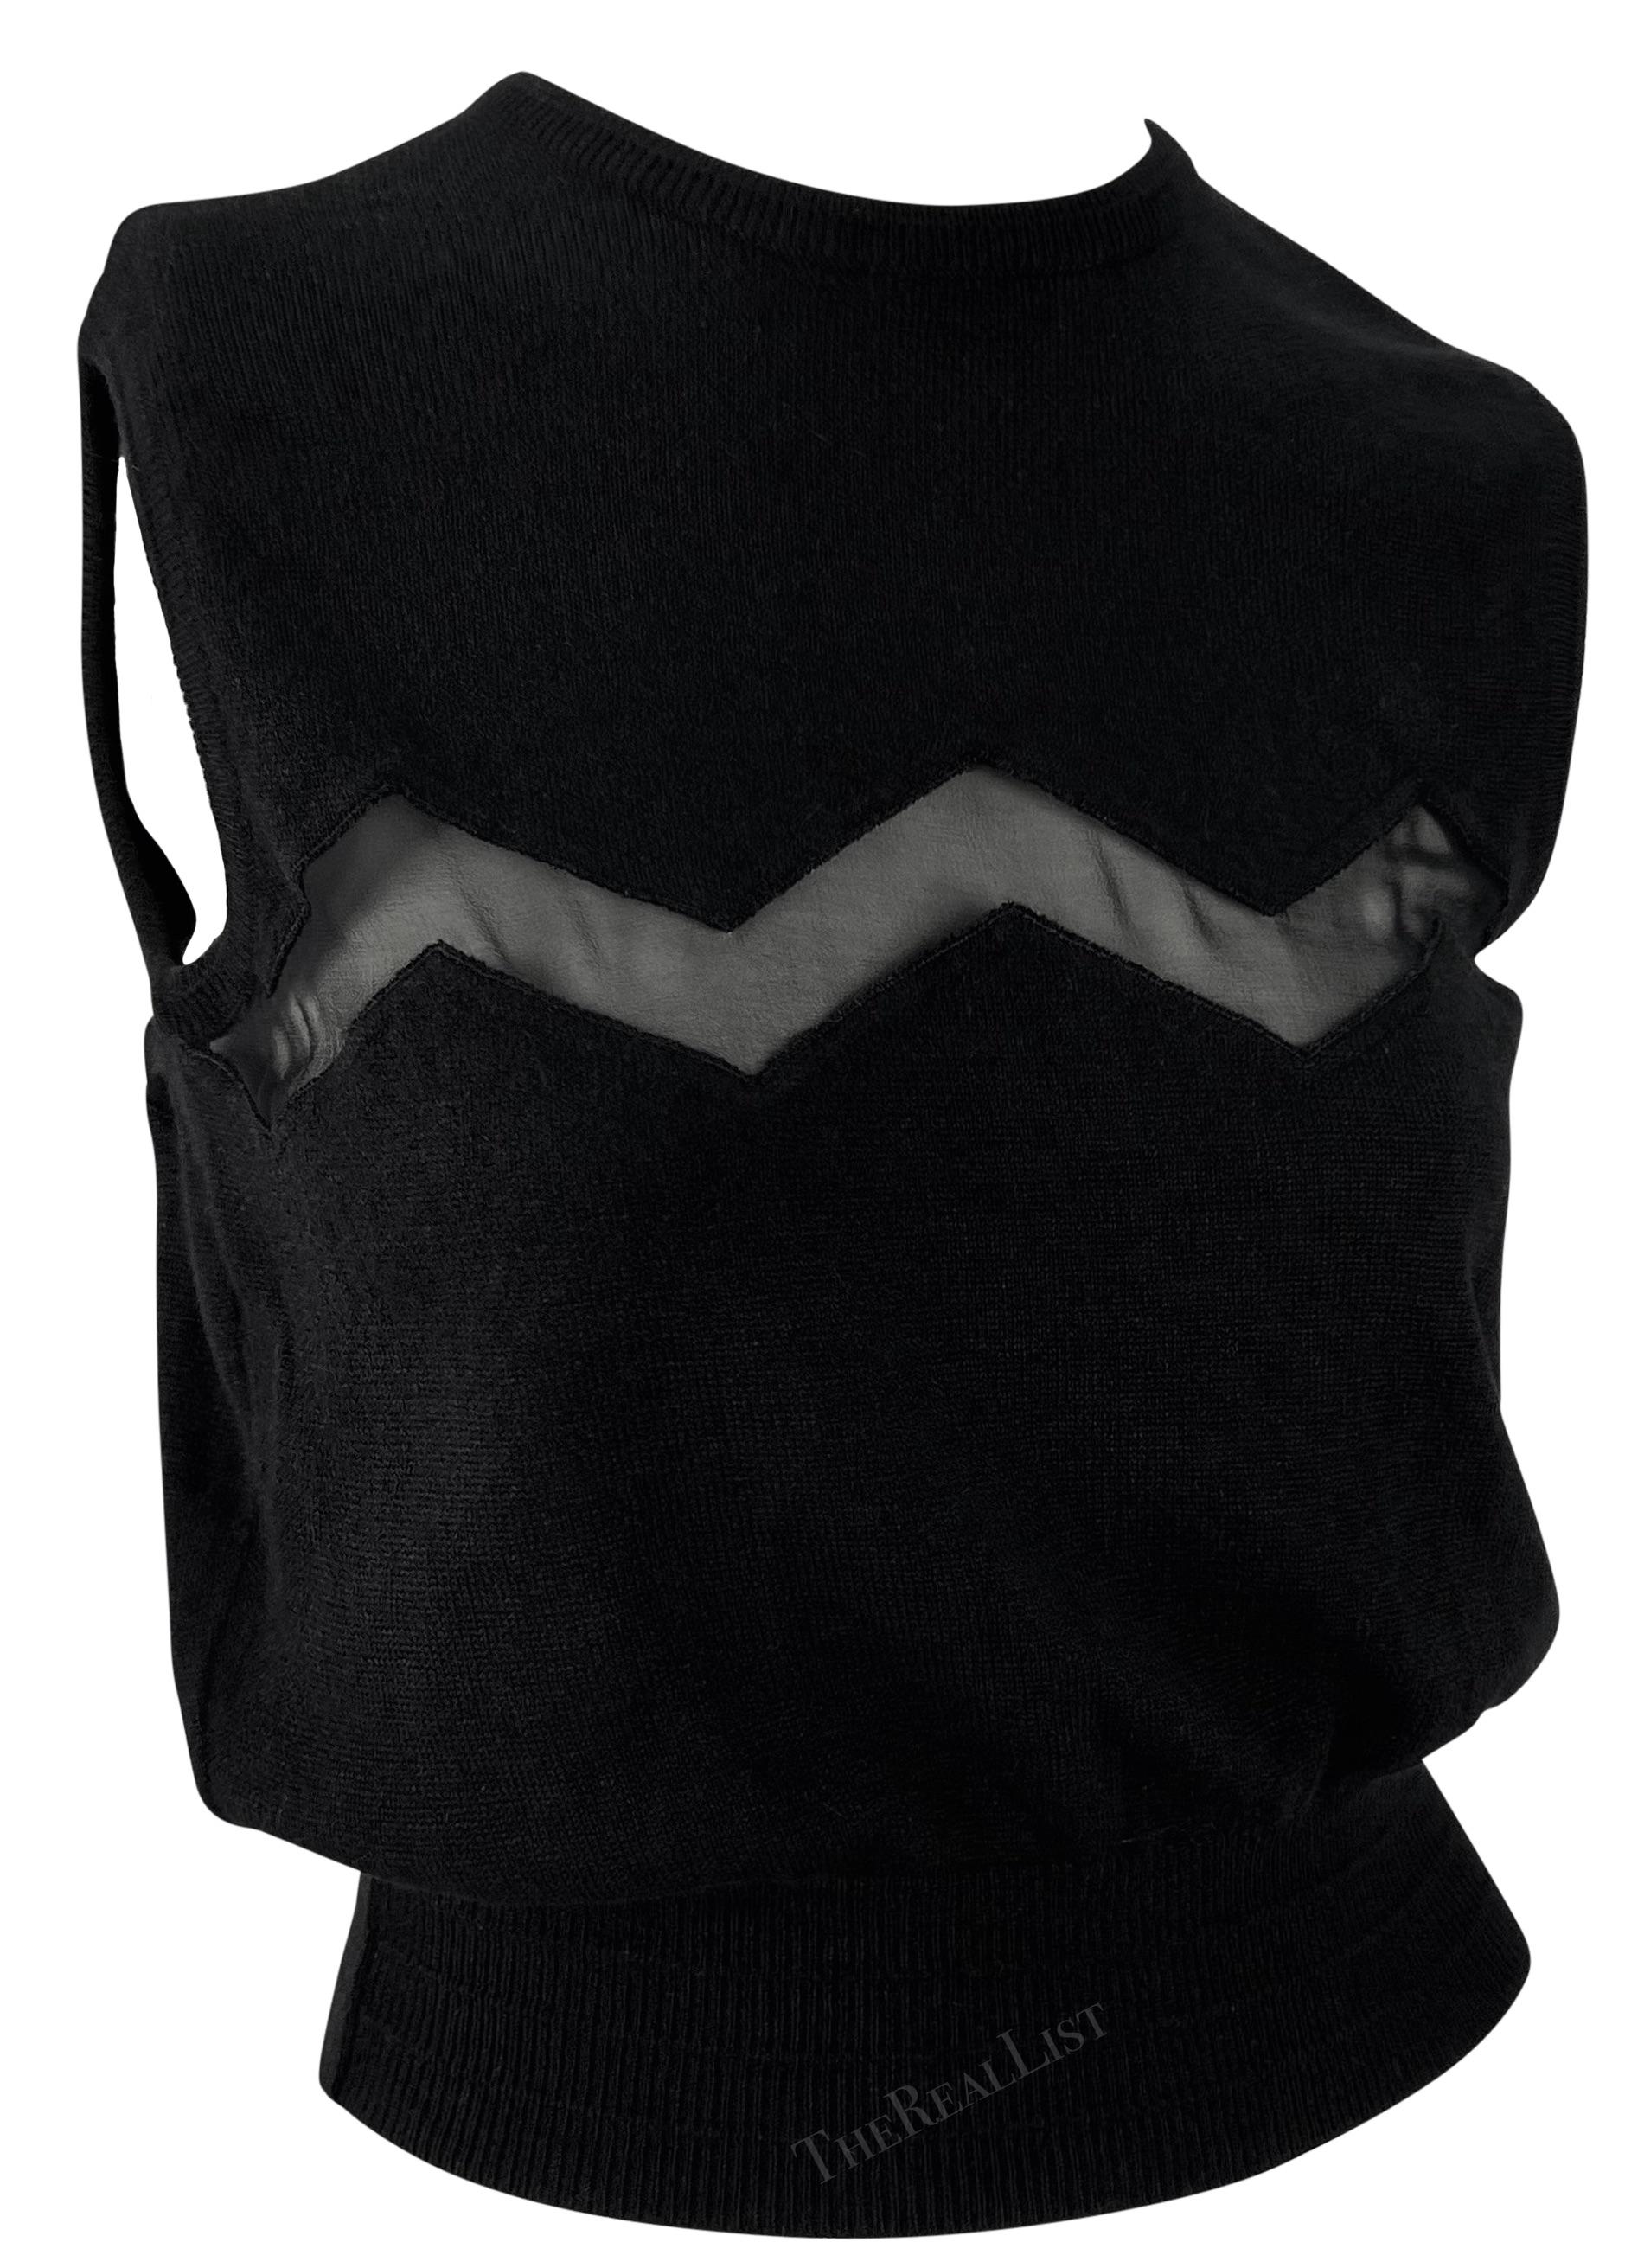 S/S 1994 Gianni Versace Sheer Zig-Zag Panel Black Knit Sweater Vest For Sale 2